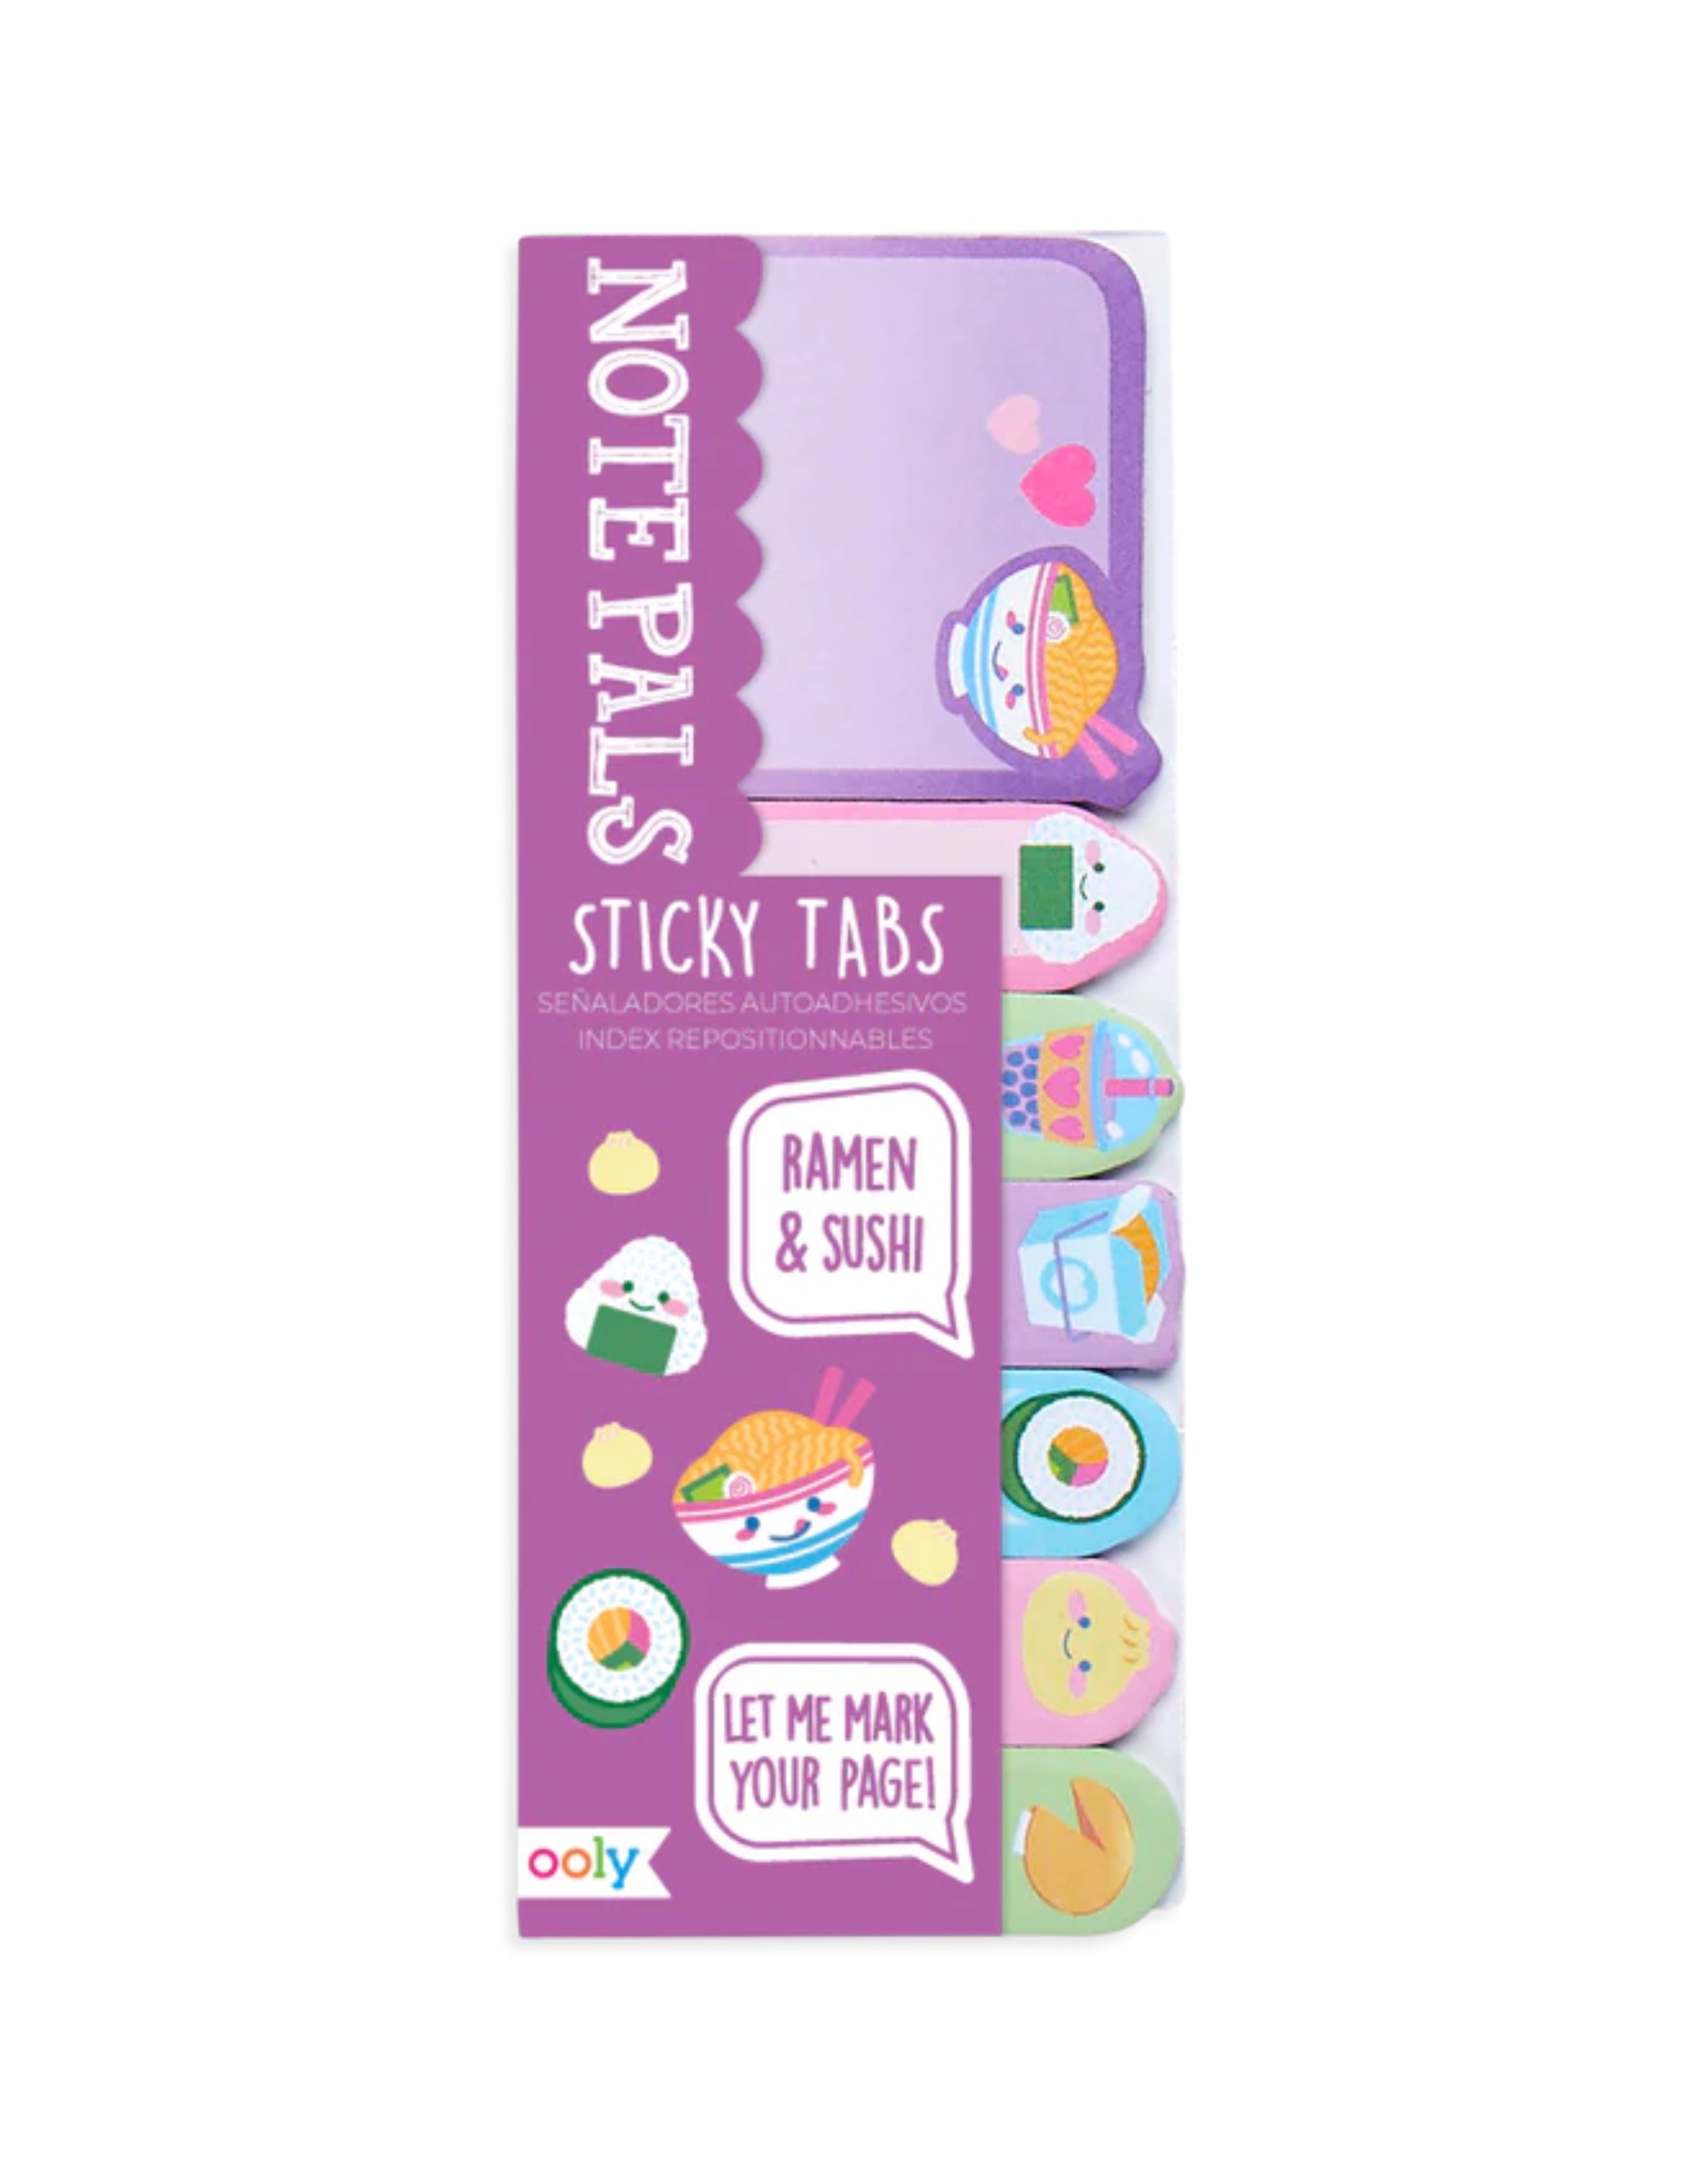 Notepals Sticky Tabs - Ramen & Sushi